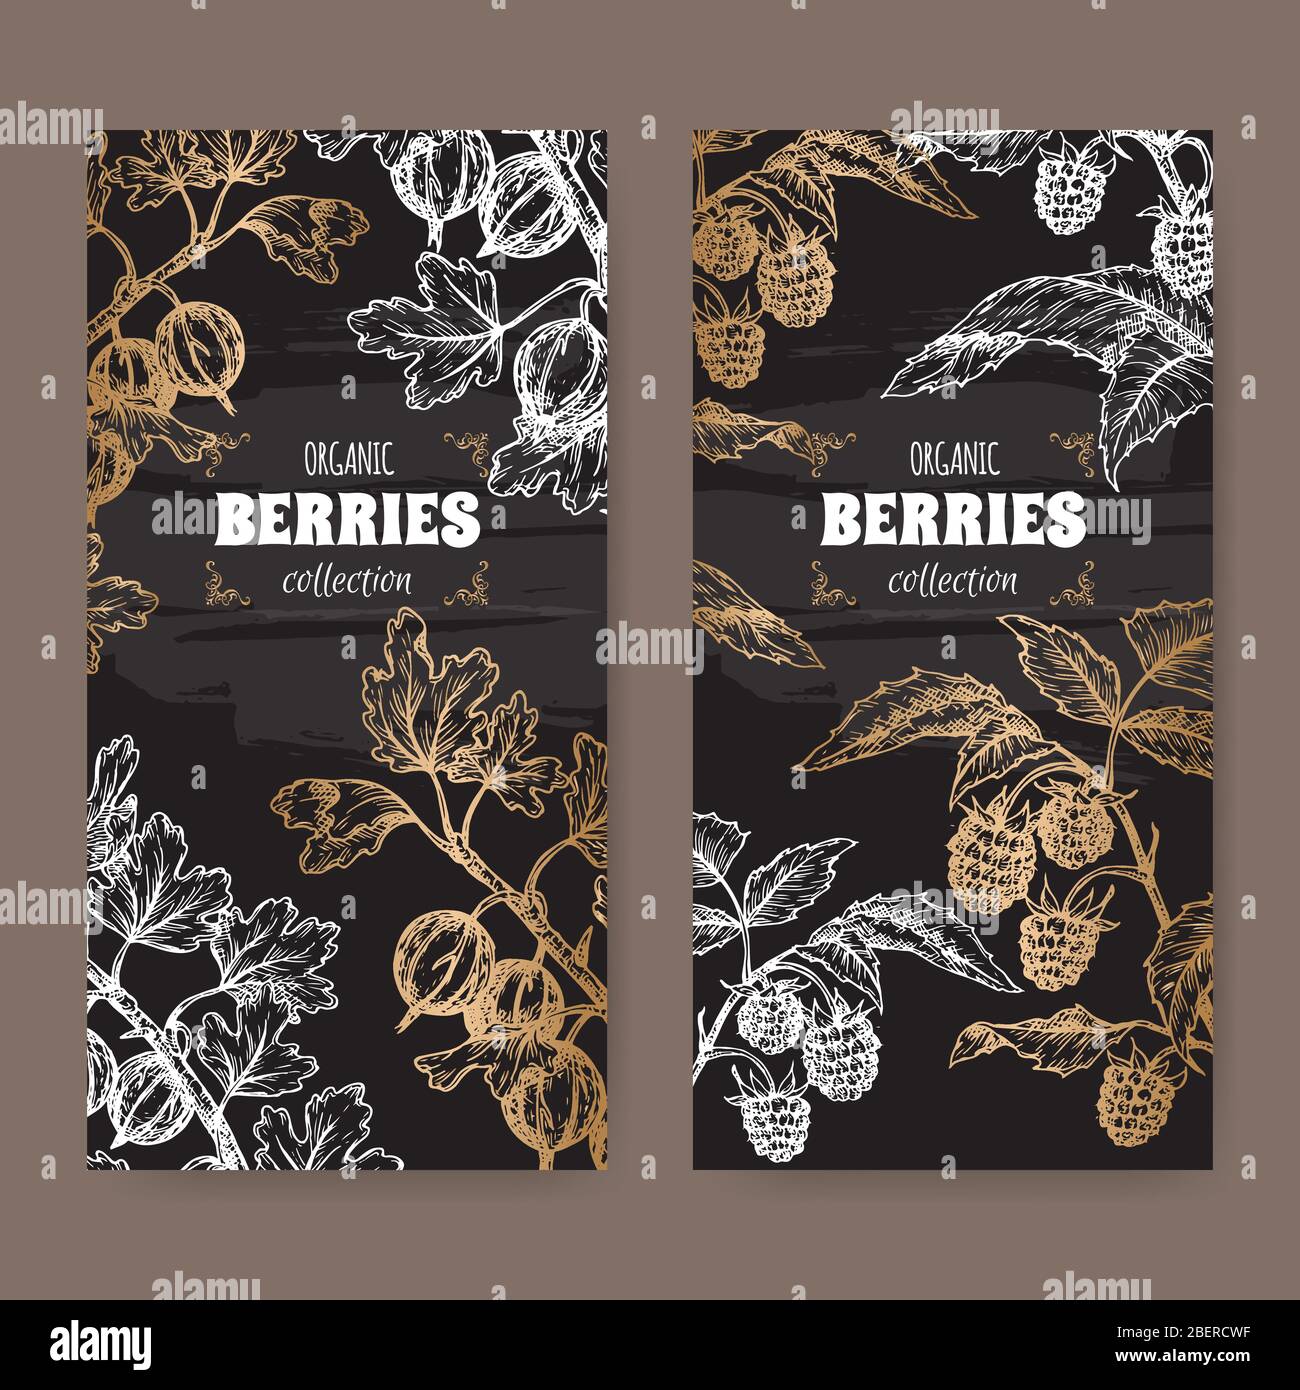 Zwei Lables mit Red Himbeer aka Rubus idaeus und Gooseberry aka Ribes uva-crispa Skizze auf schwarz. Berry Fruits Serie. Stock Vektor